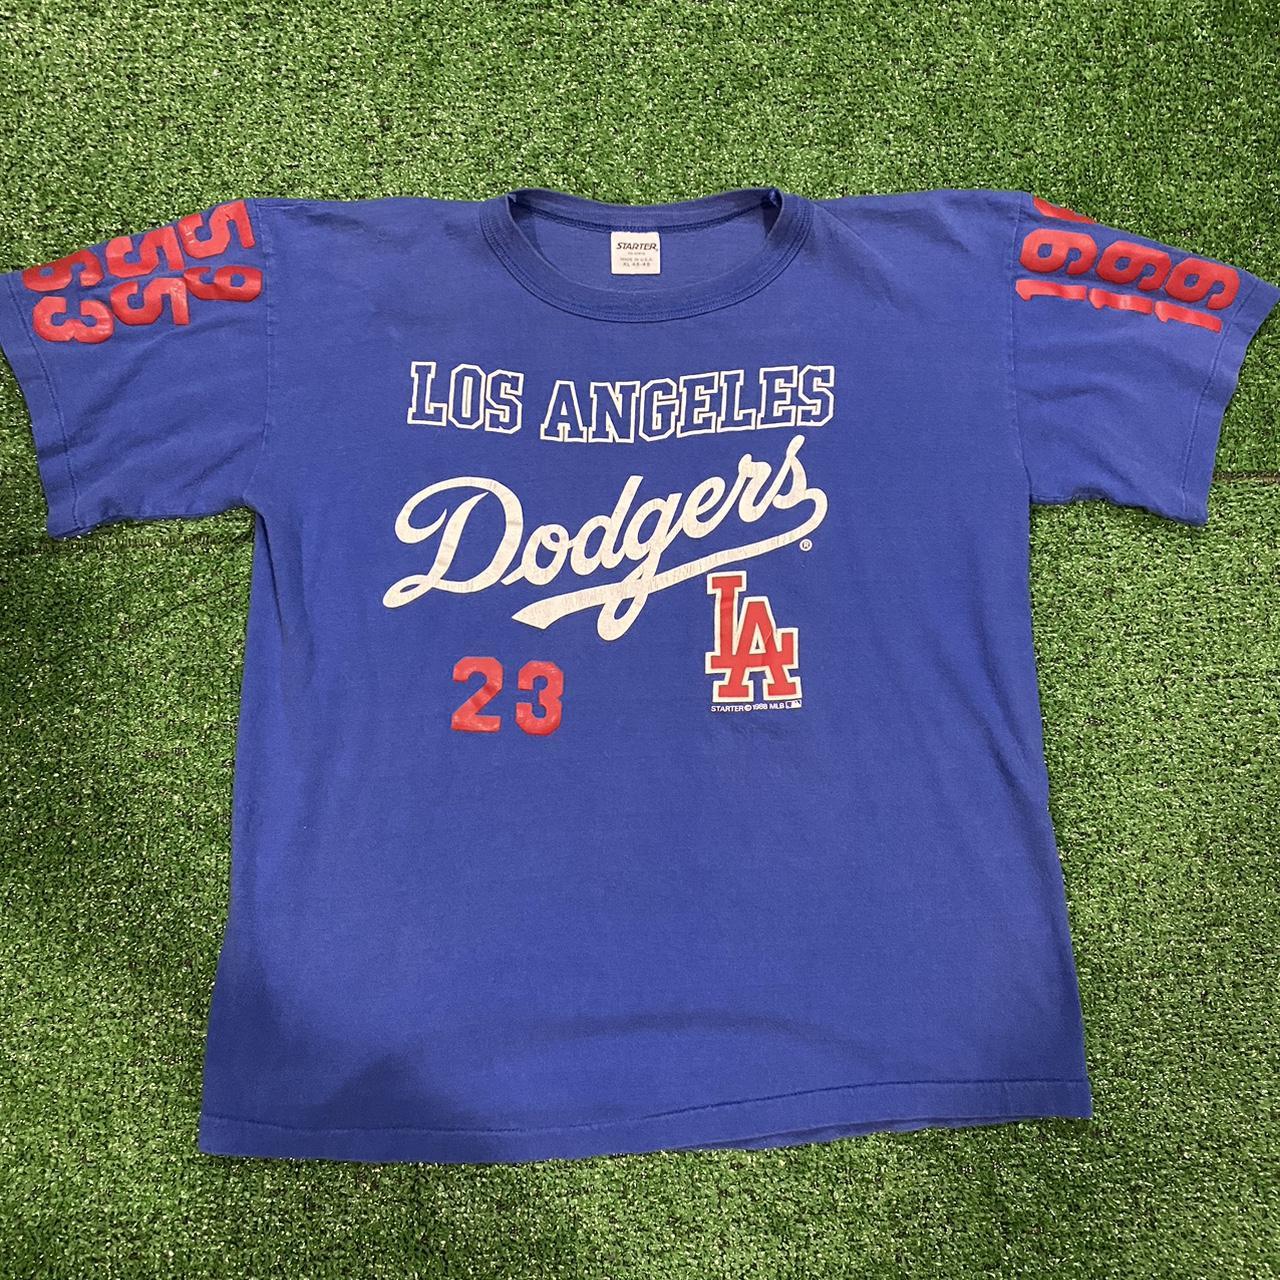 LA Dodgers Grey/Blue Shirt. Brand New Never Worn w/Tags - Depop